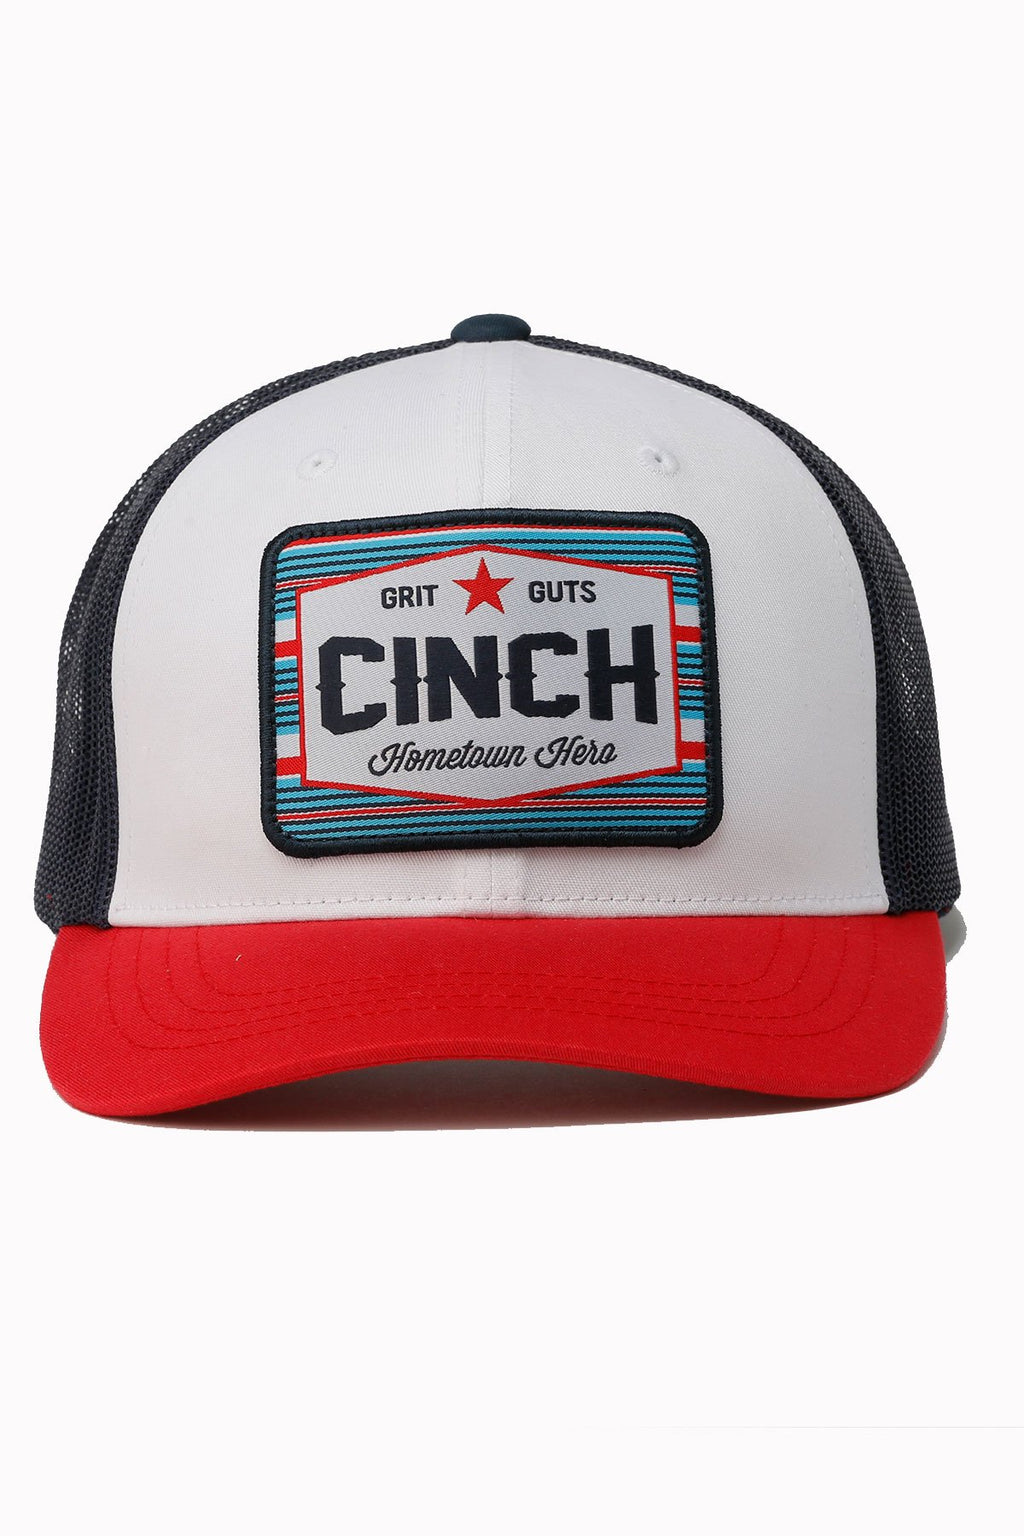 Men's Cinch Hometown Hero Snapback Cap - WHITE / RED / NAVY